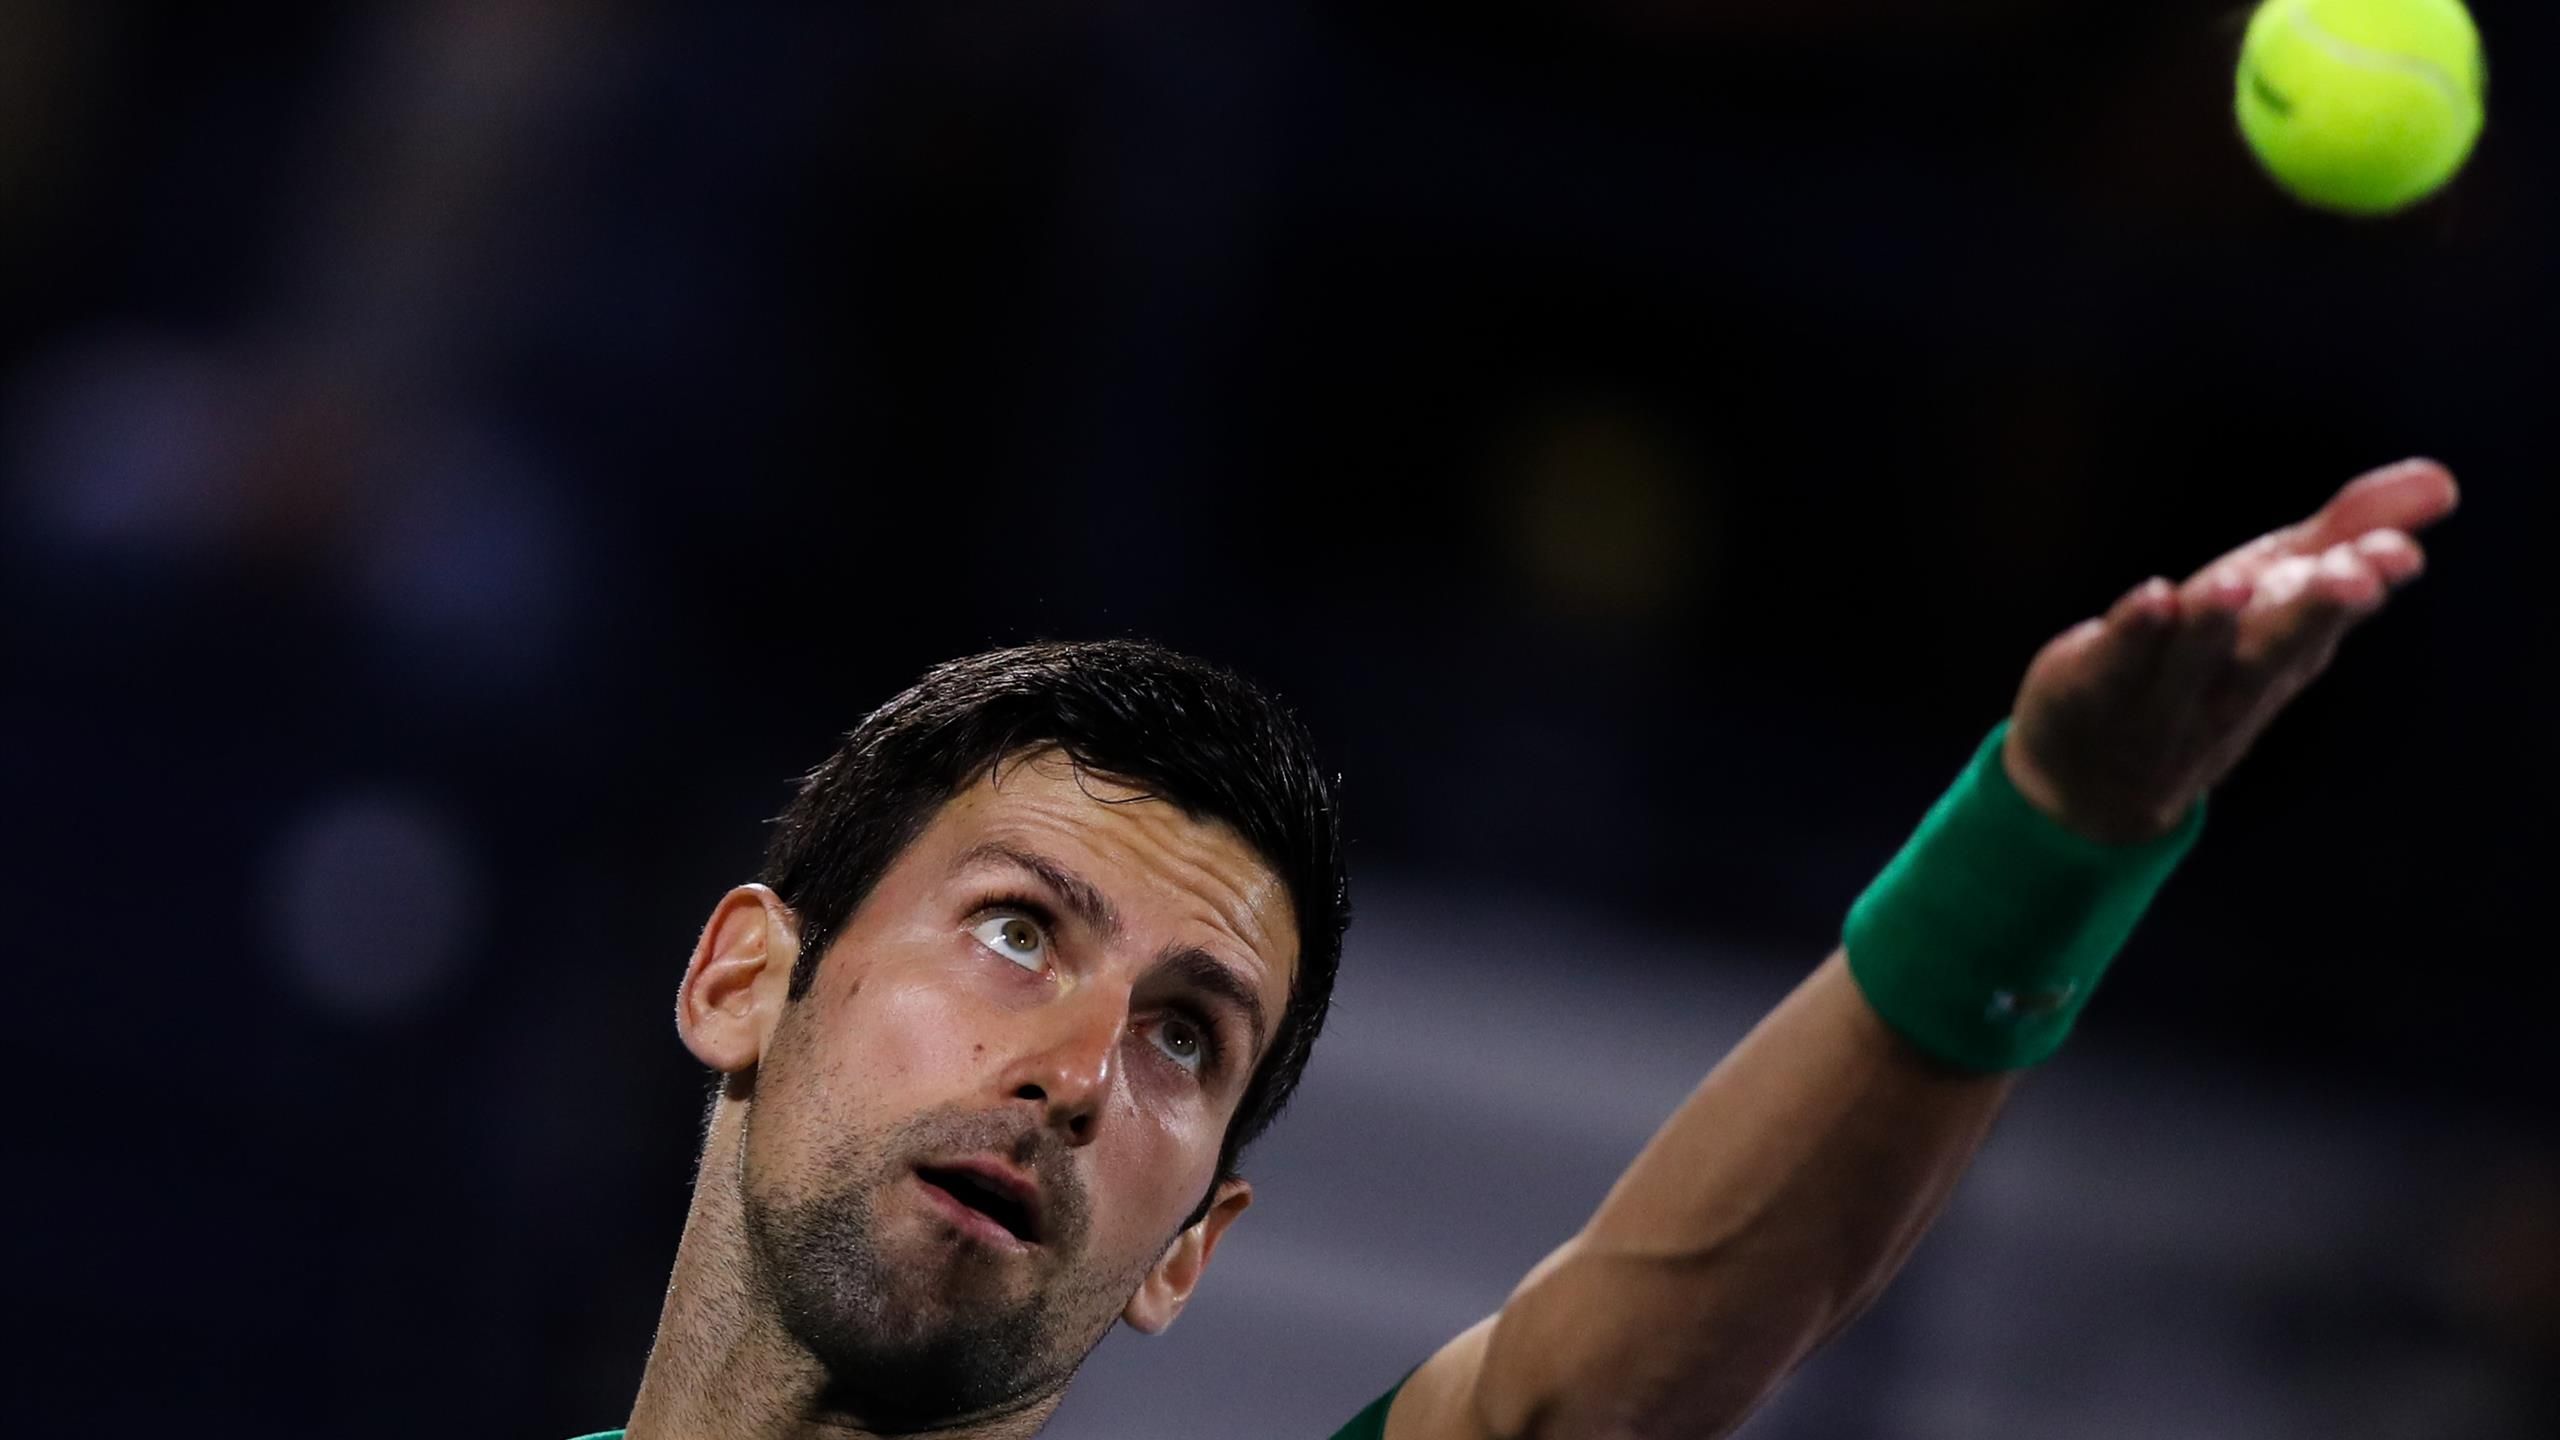 Djokovic advances, Rublev saves 5 match points in Dubai win